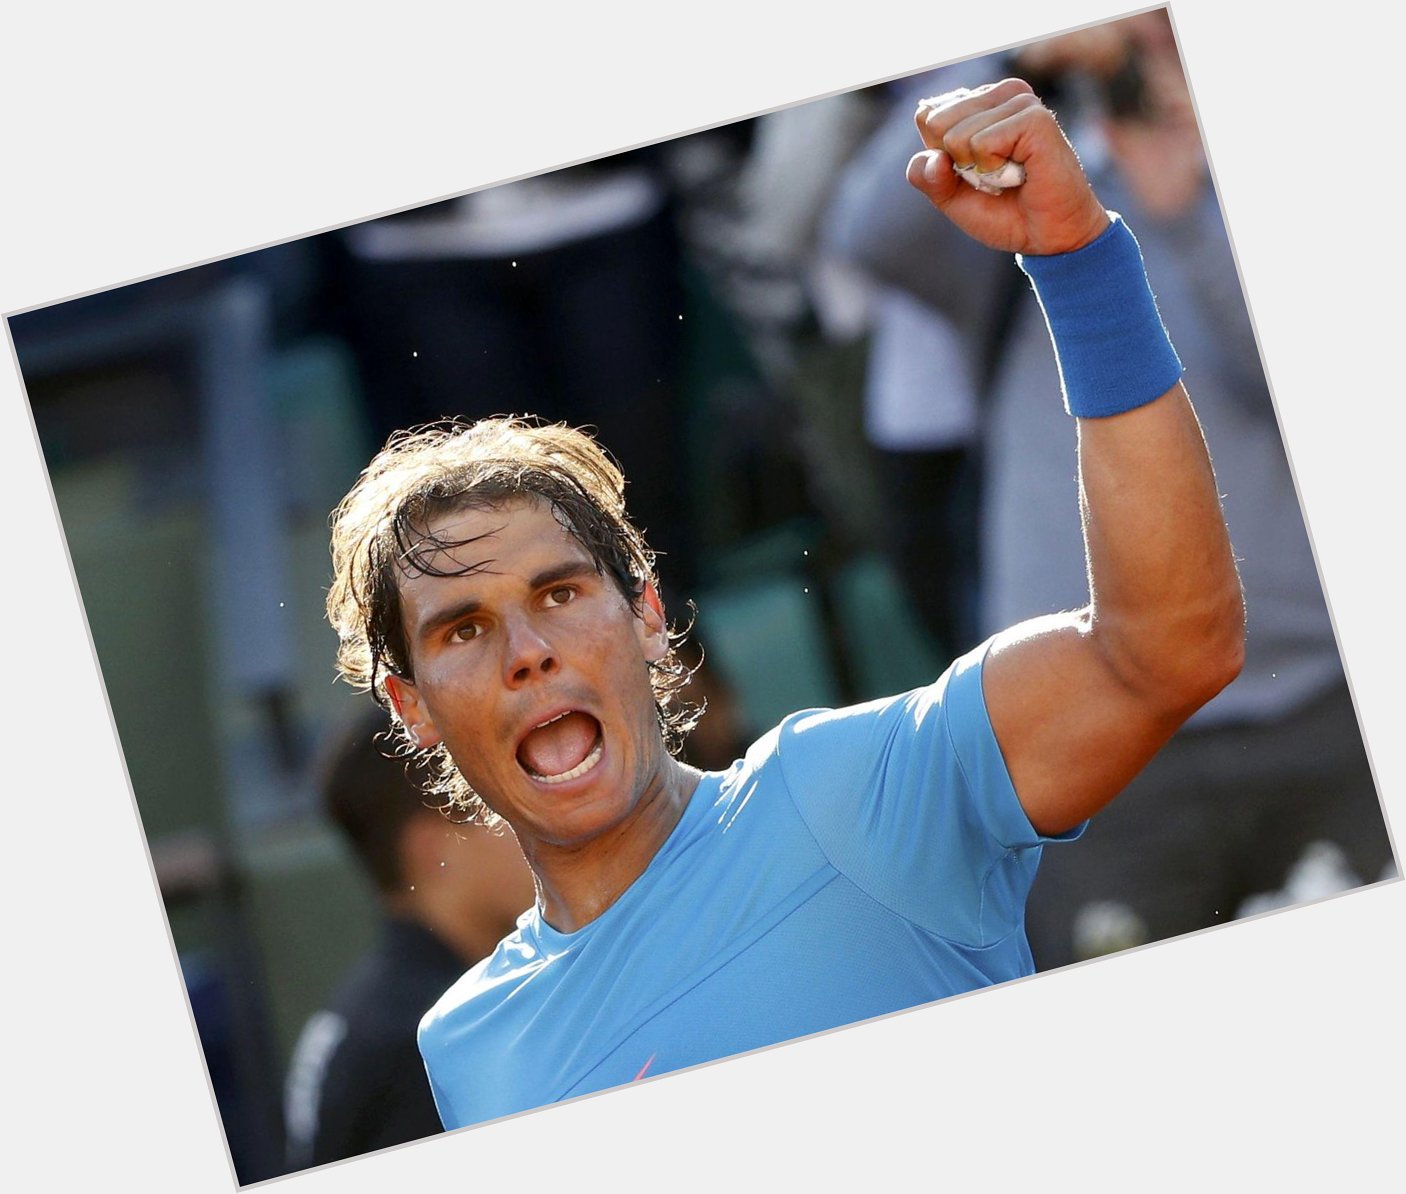 Happy 29th birthday to nine-time winner Rafael Nadal! 